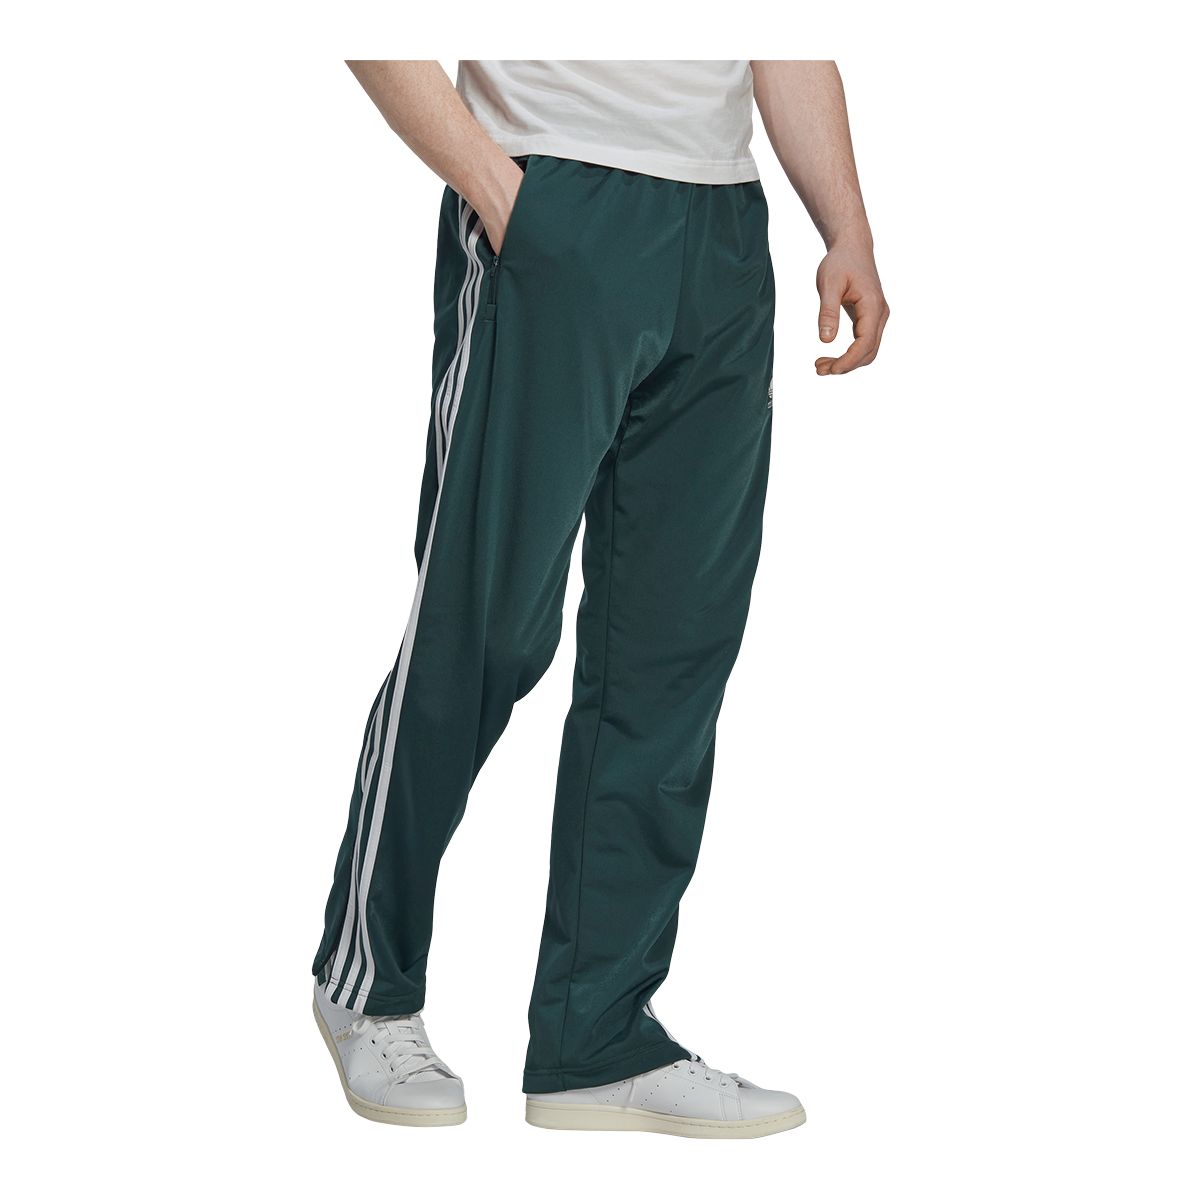 Green adidas Originals SST Track Pants | JD Sports UK